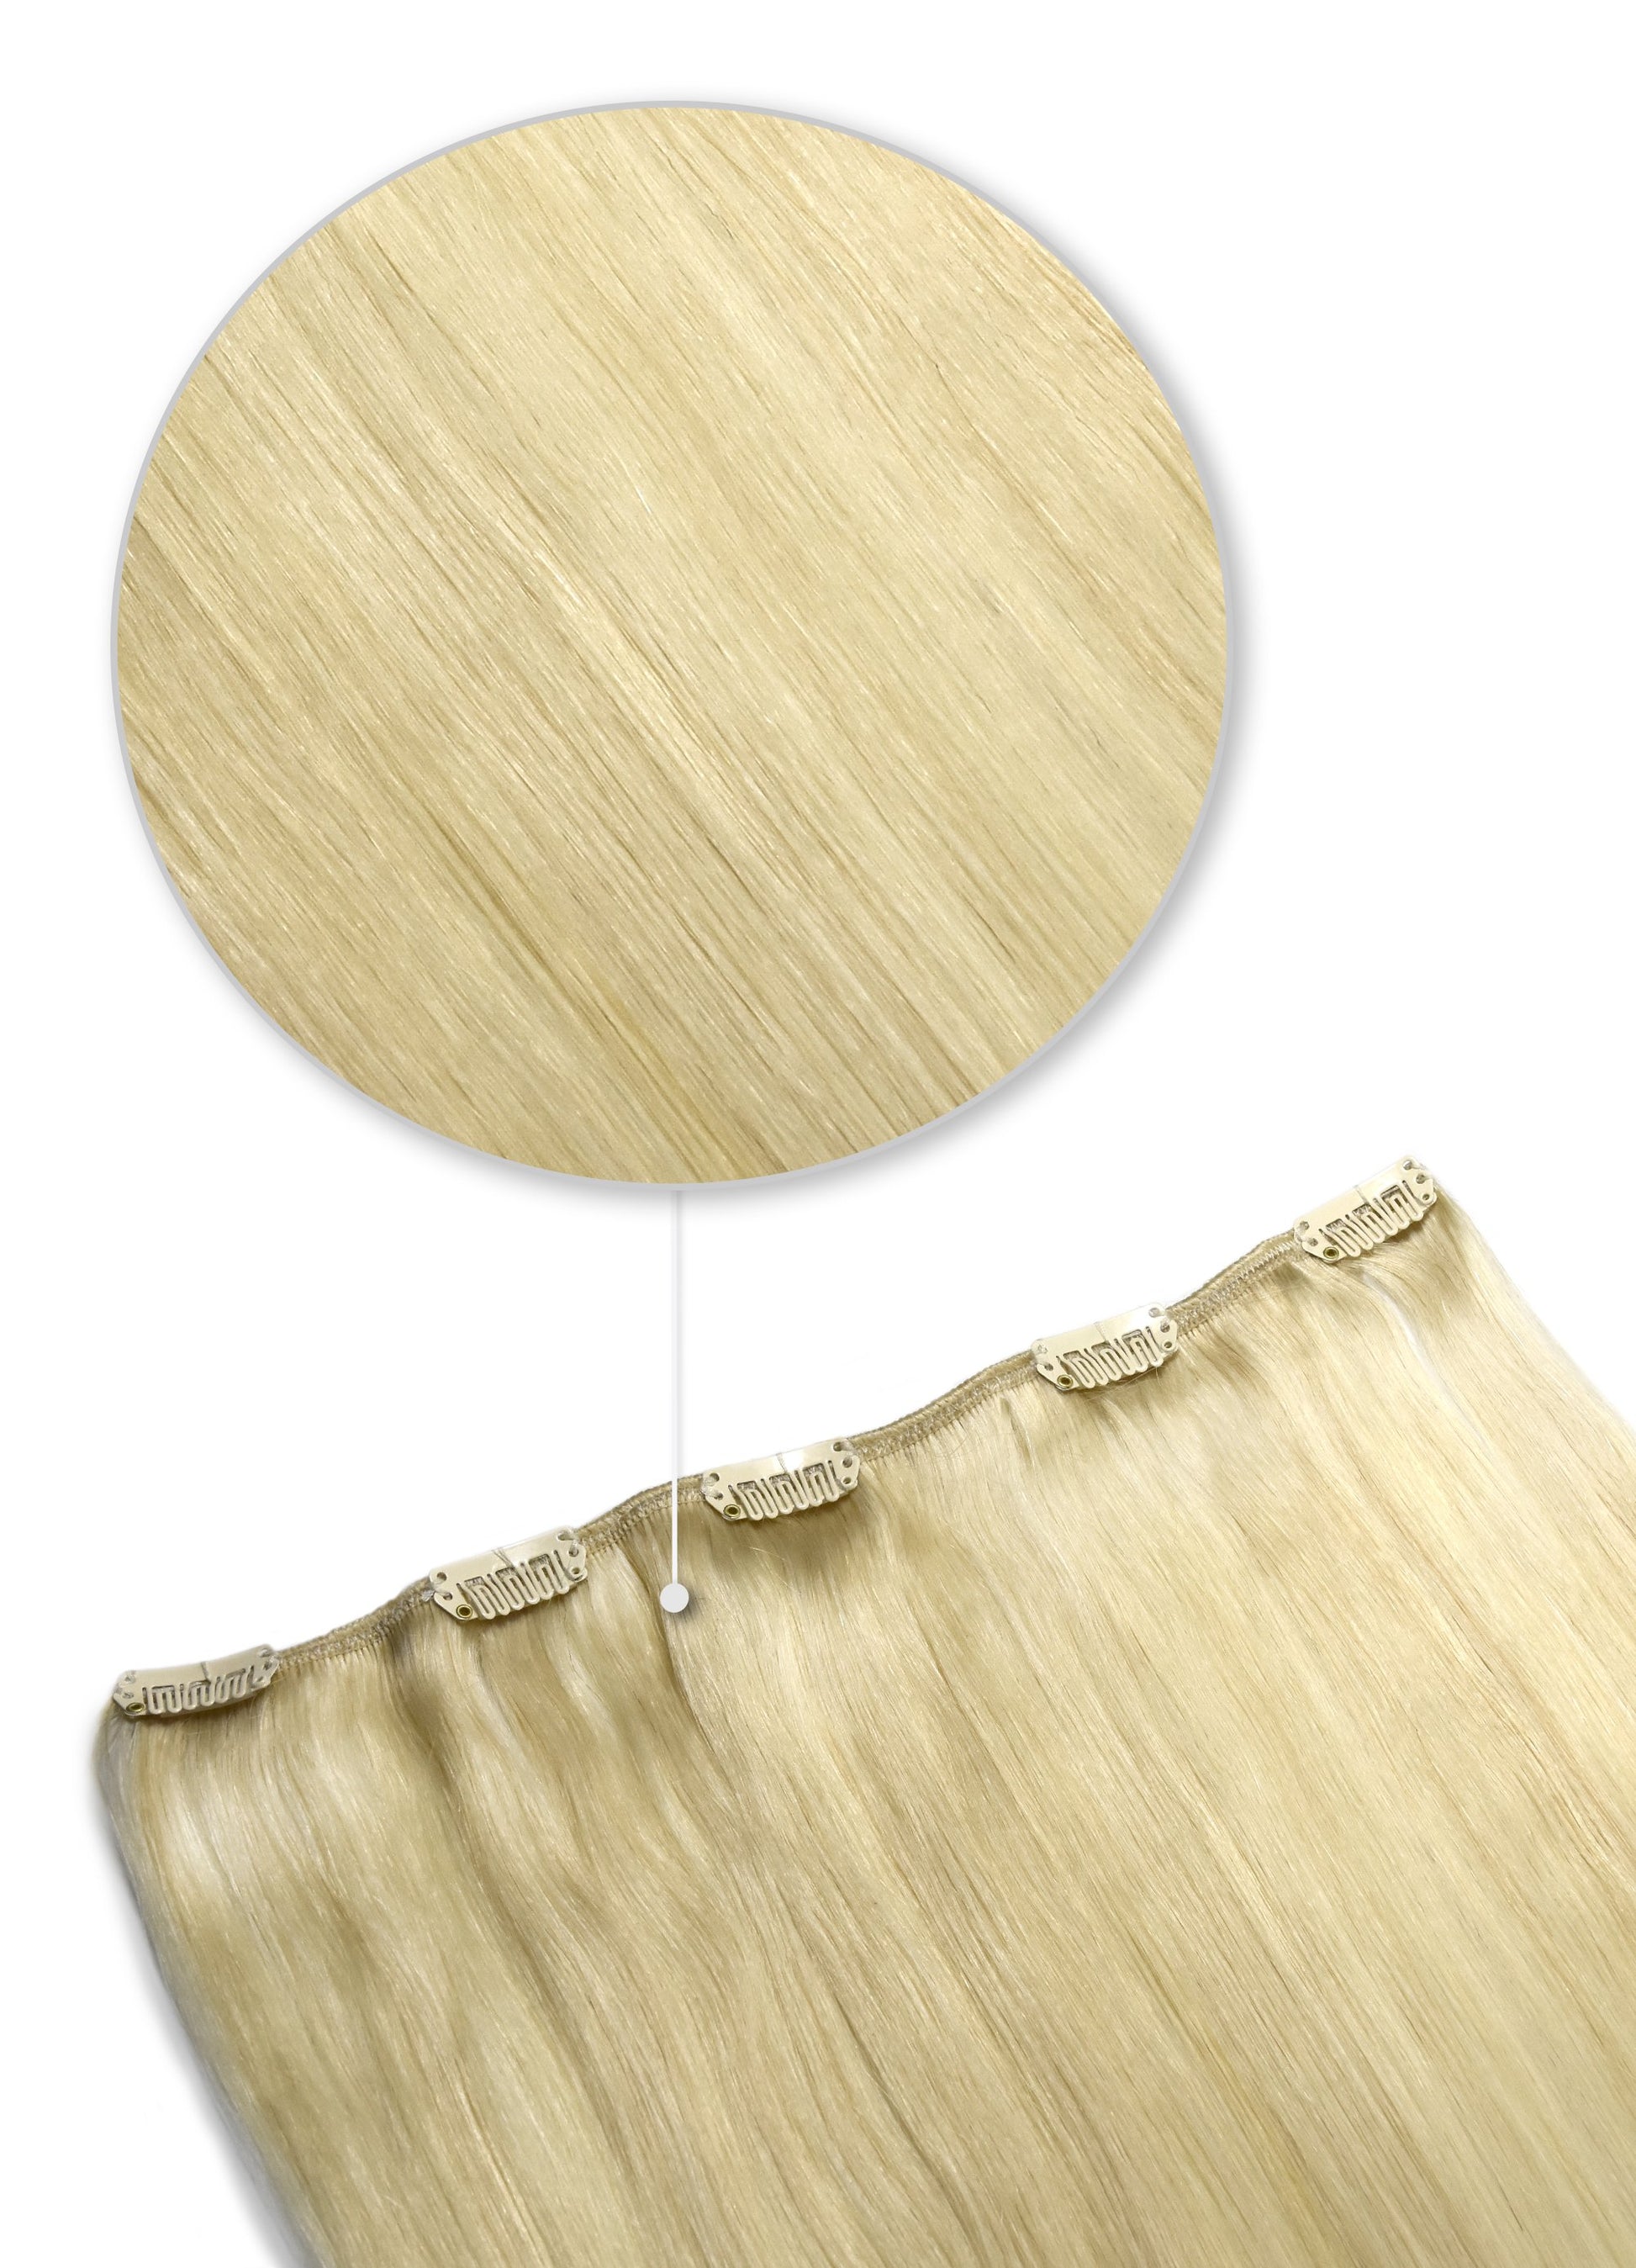 hair pieces - one piece clip in hair extensions shade 613 bleach blonde